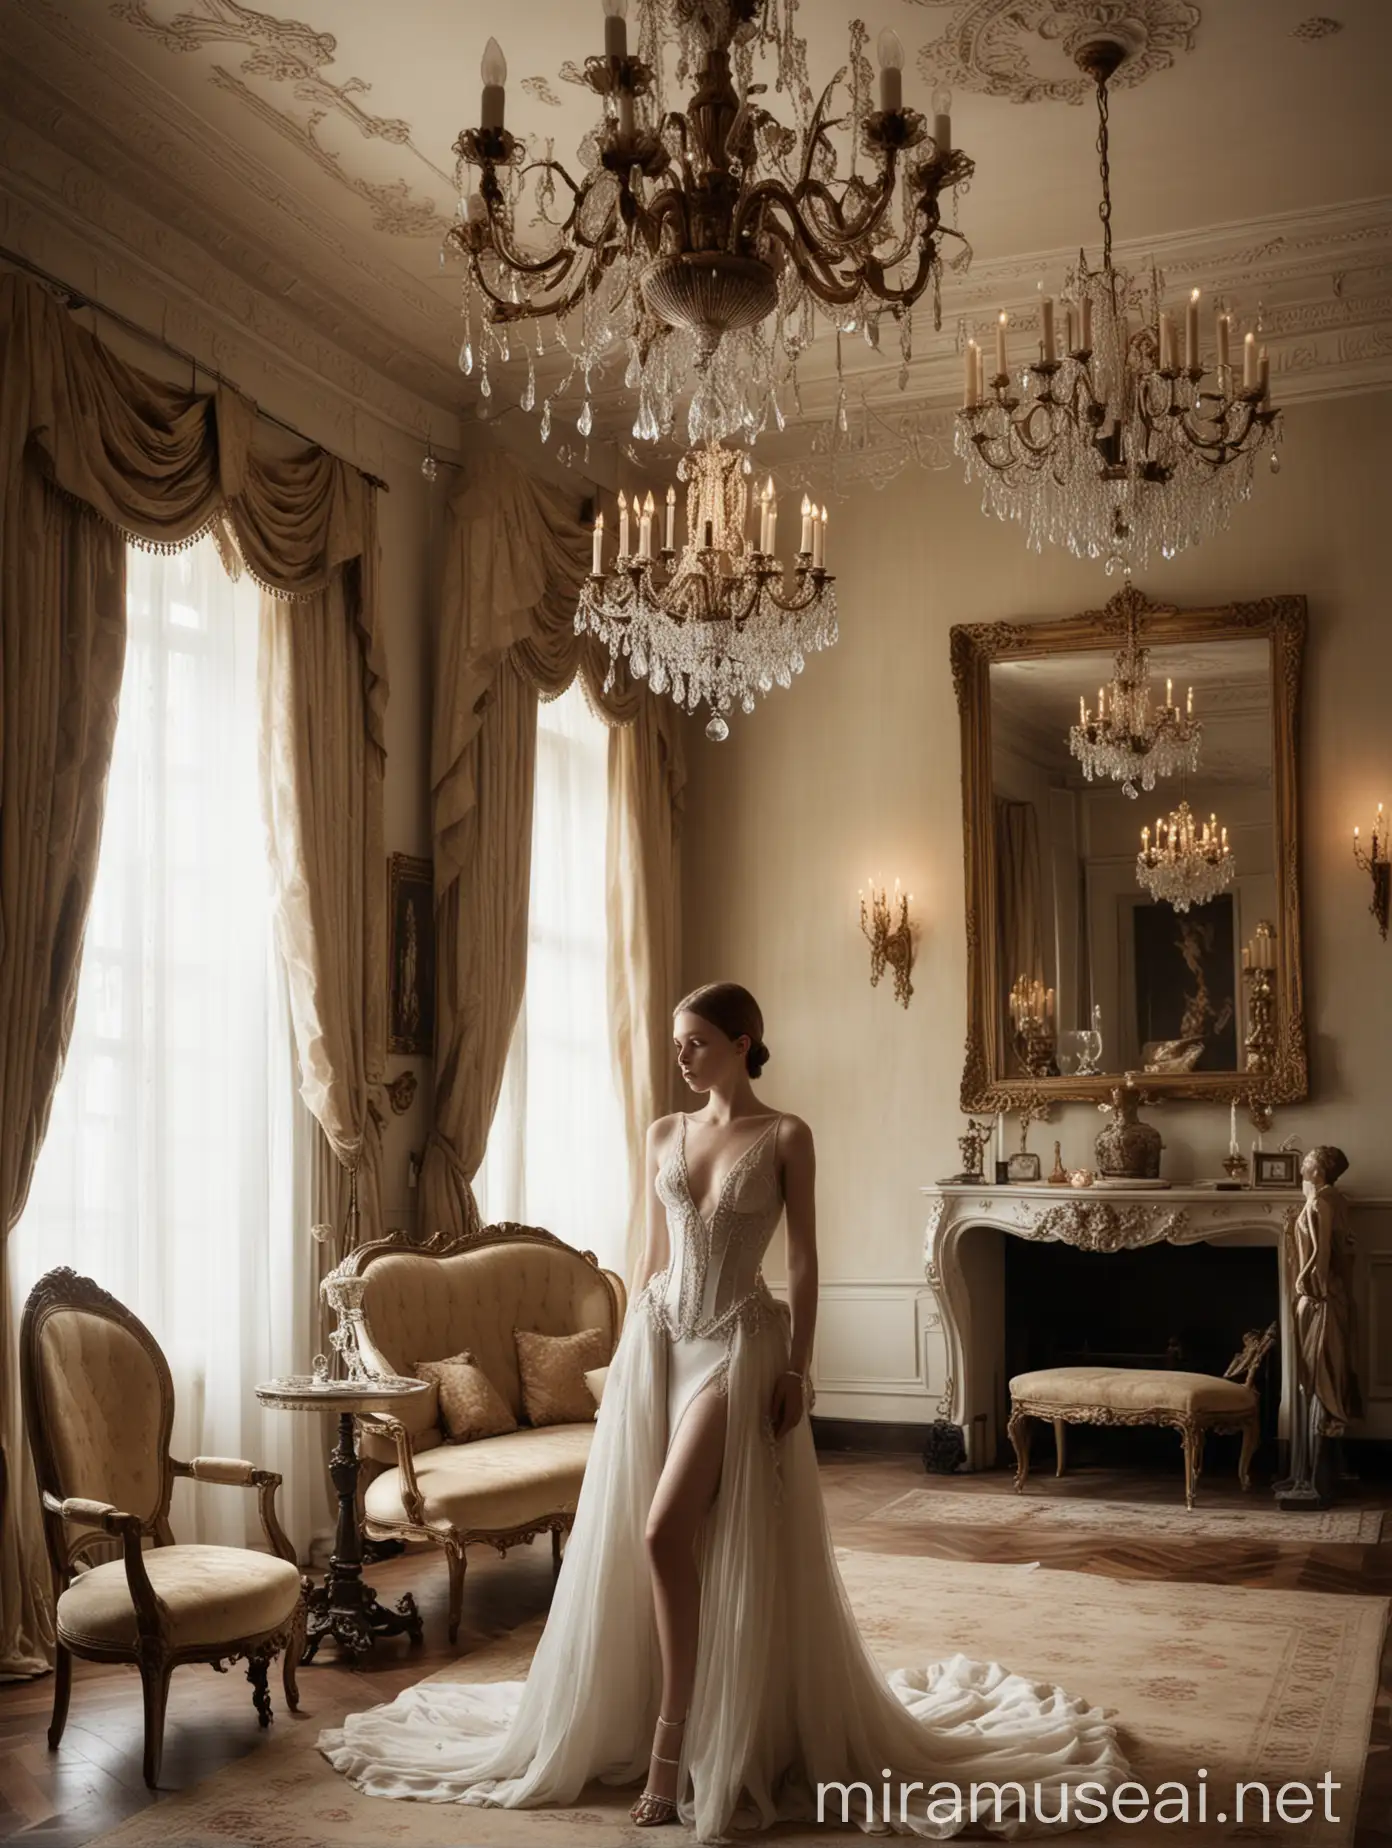 Elegant Androgynous Woman in Alexander McQueen Dress with Chandelier